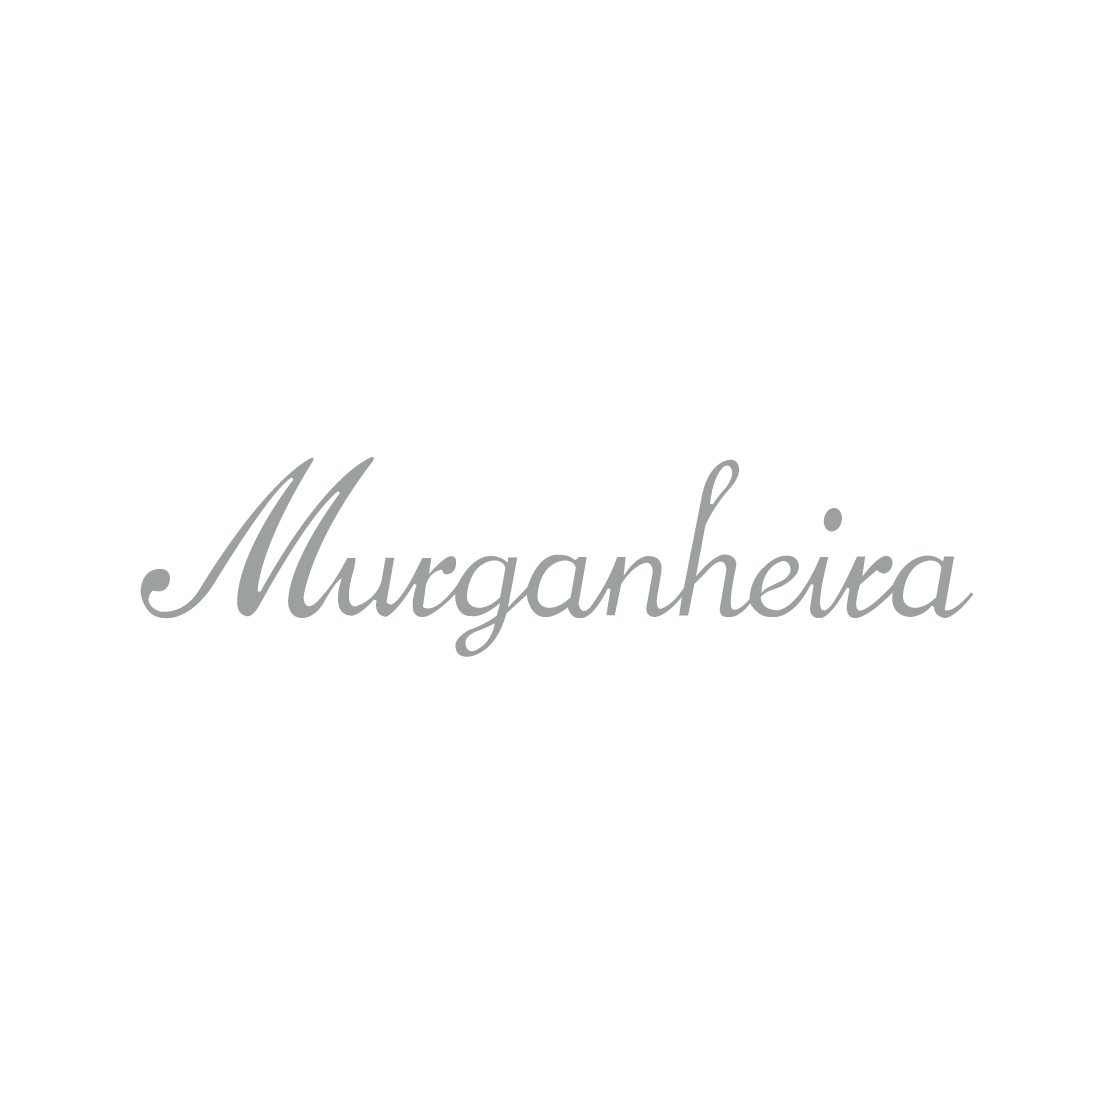 Murganheira